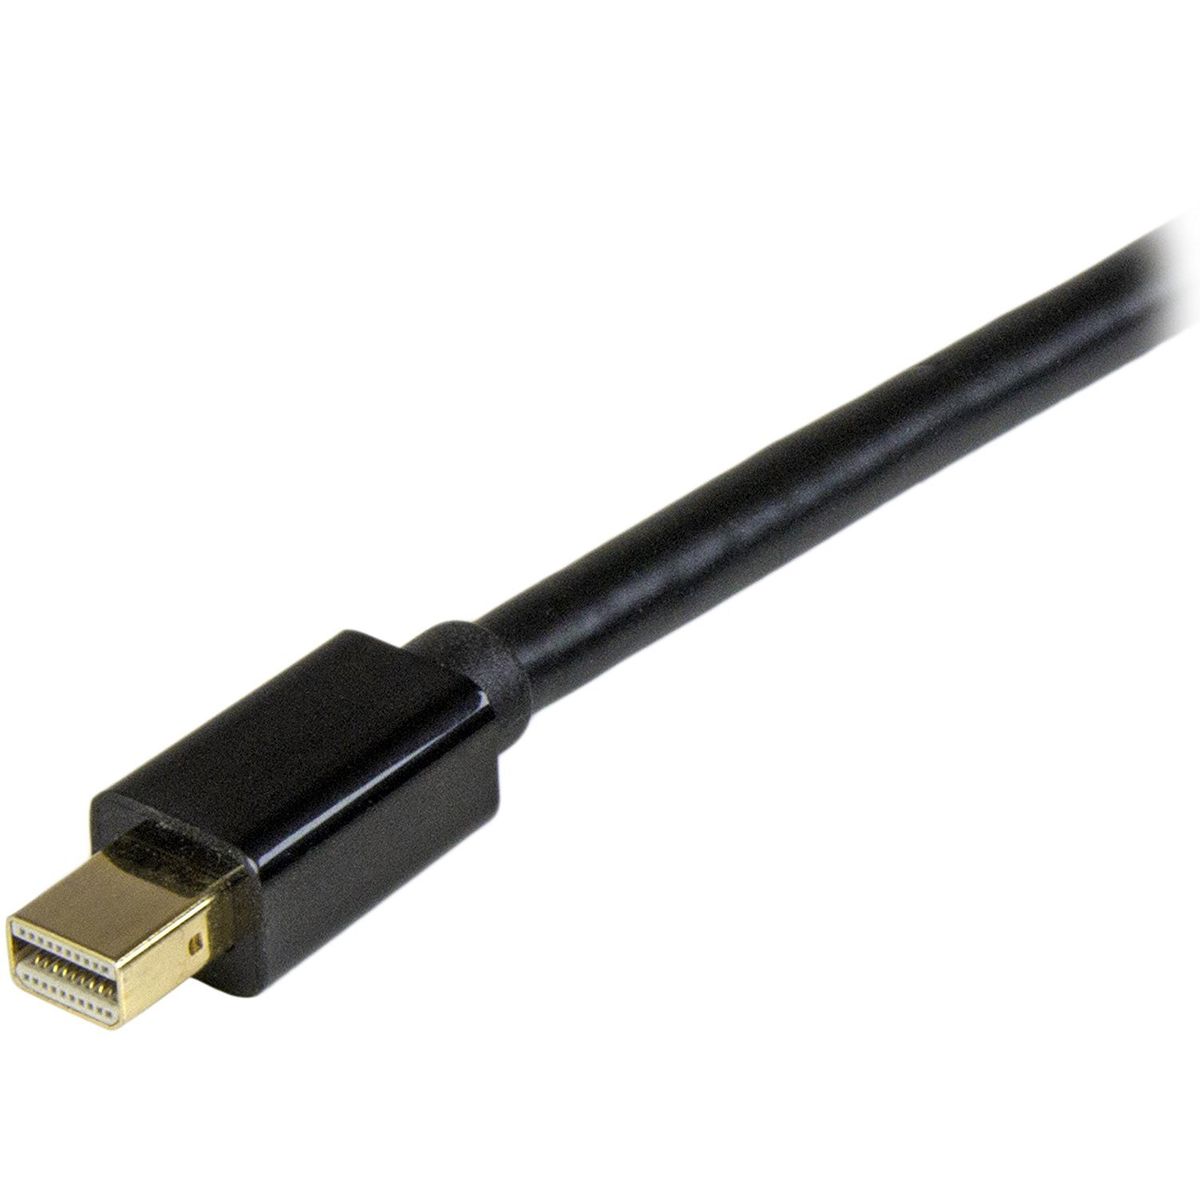 Startechcom Cable Adaptateur Mini Displayport Vers Hdmi Convertisseur Mini Dp Vers Hdmi 4k 30 Hz Mm 5 M Noir